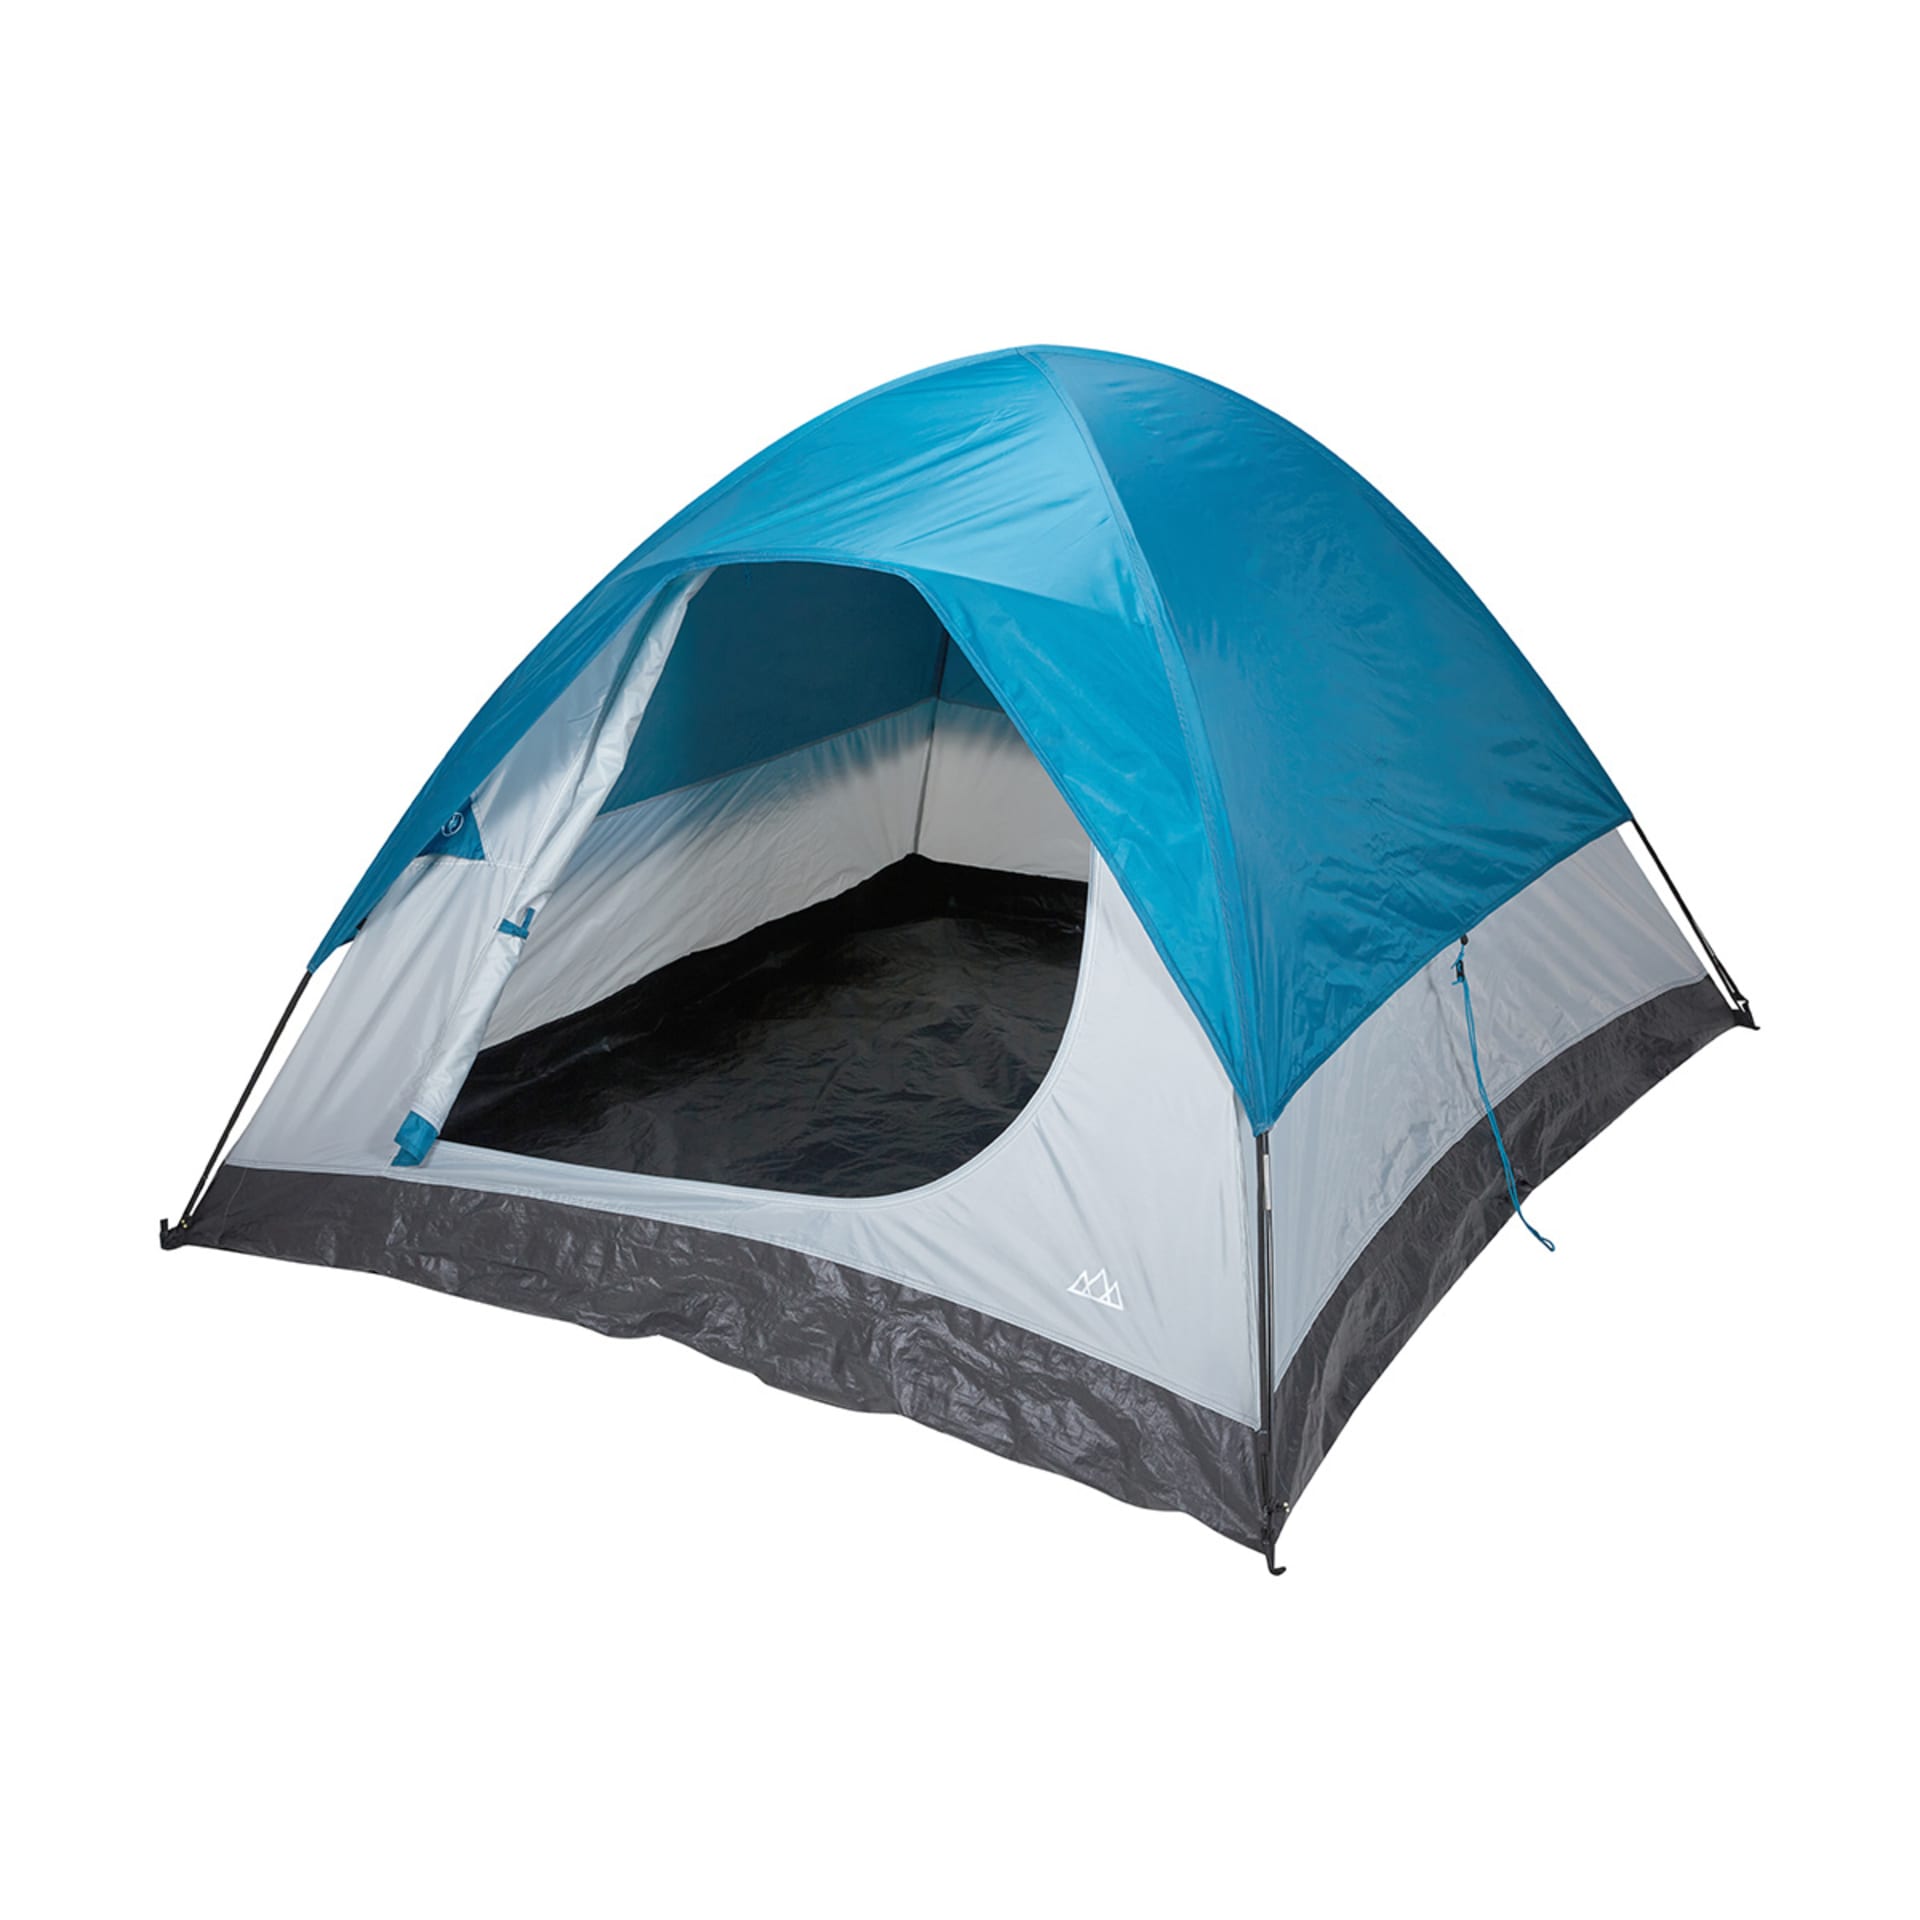 3 Person Dome Tent - Kmart